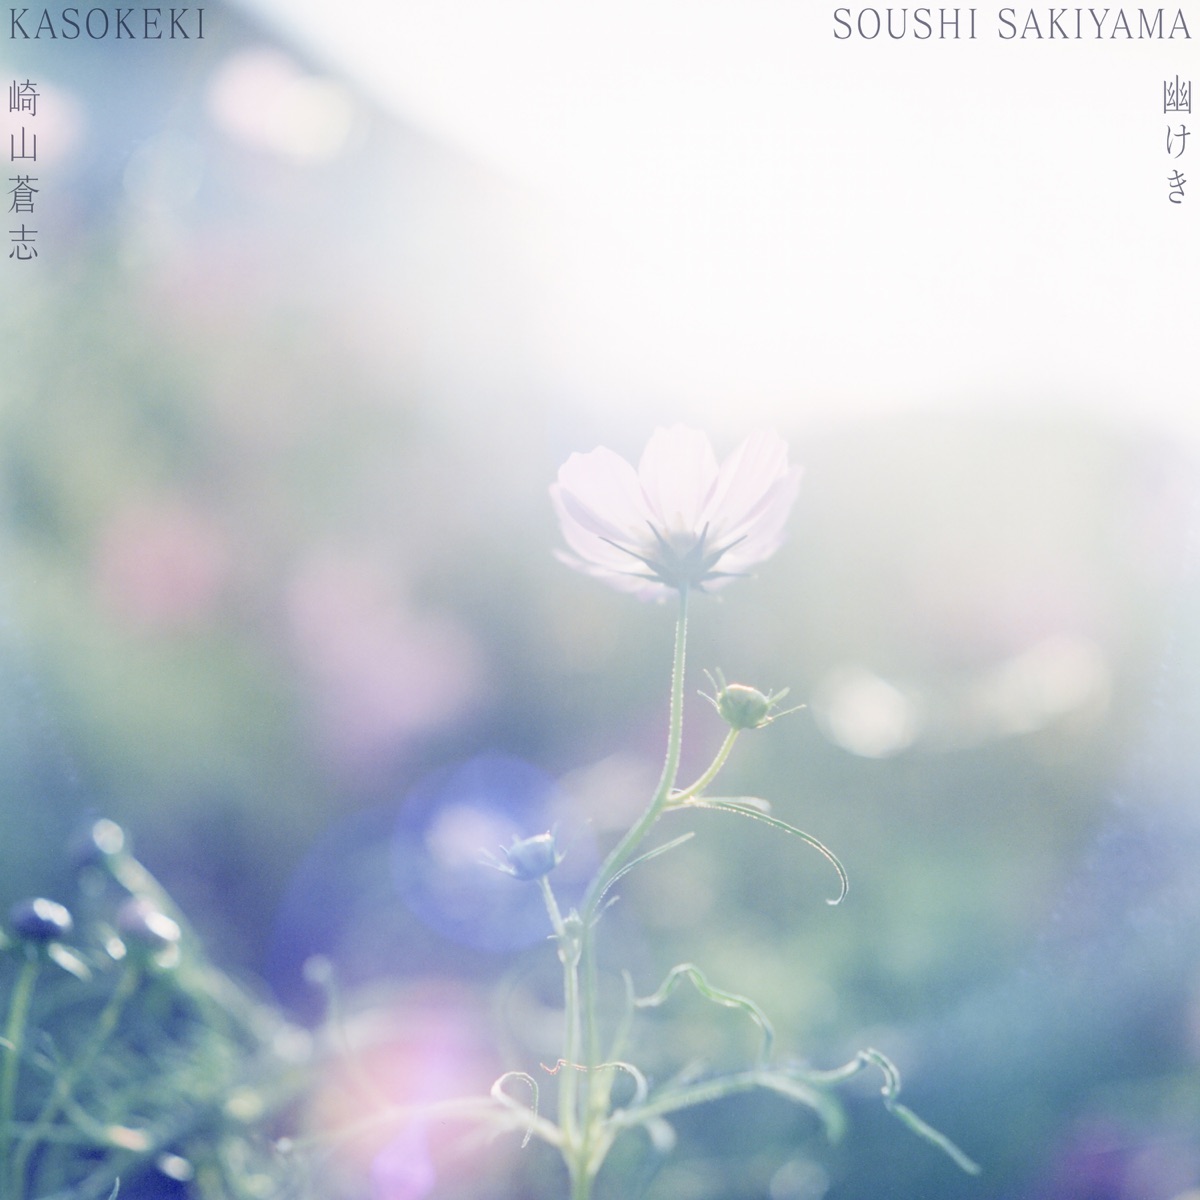 Cover art for『Soushi Sakiyama - Kasokeki』from the release『Kasokeki』